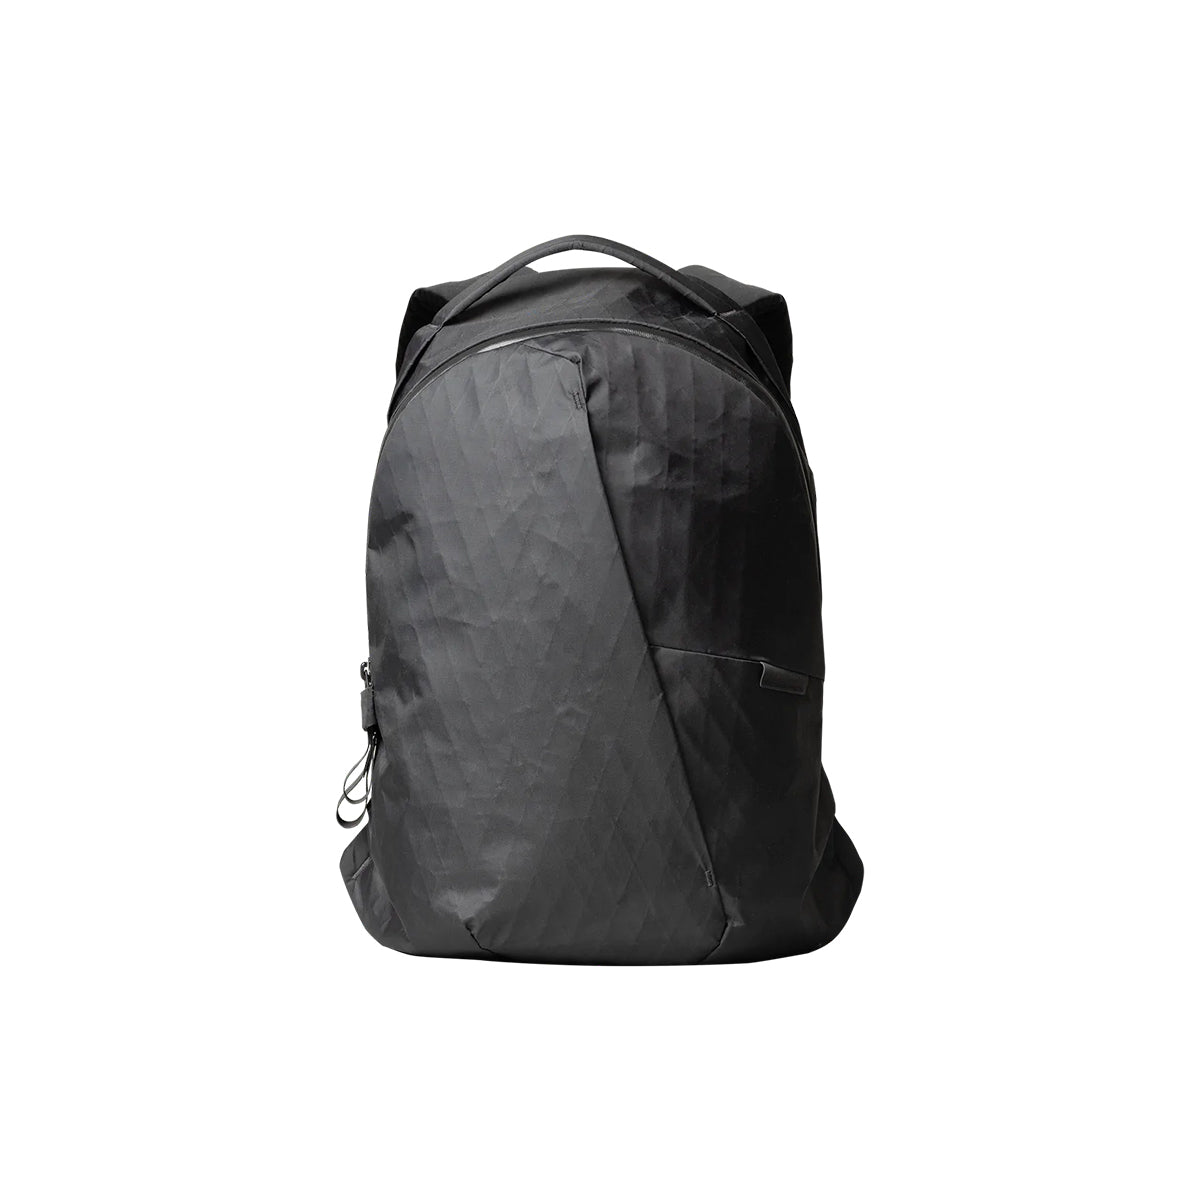 Able Carry : Thirteen Daybag : X-Pac Black (VX21)